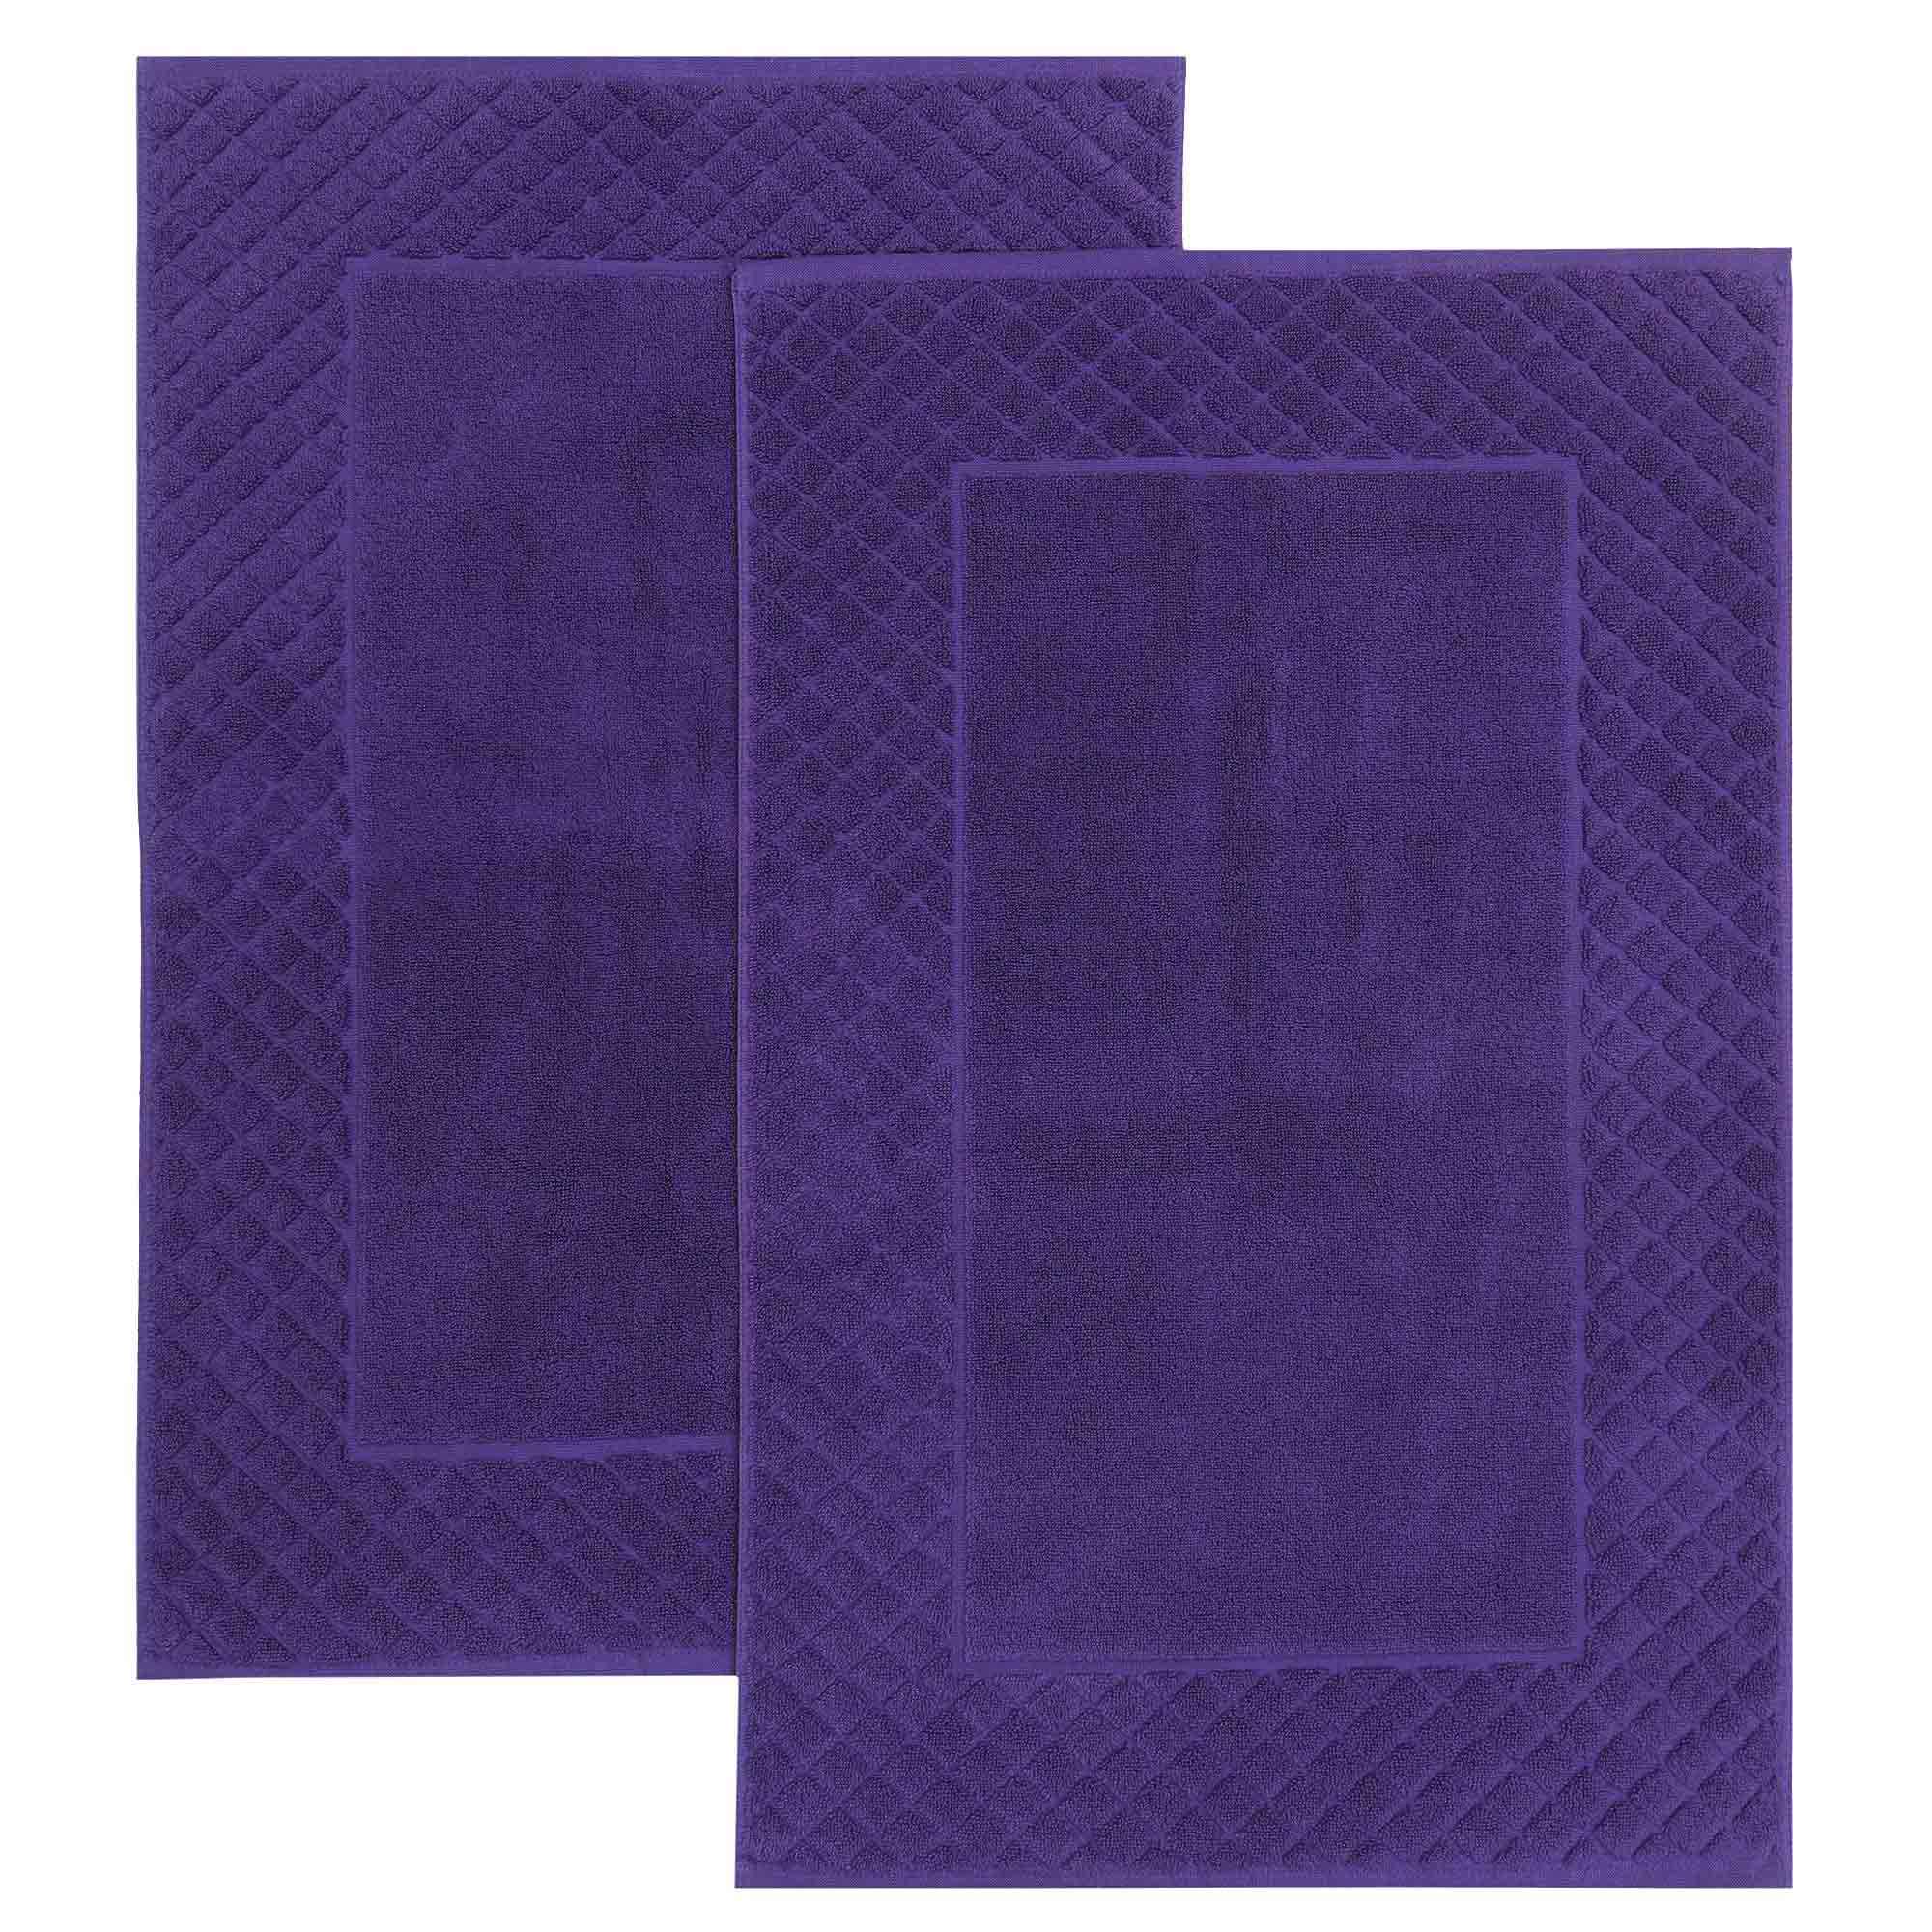 Bourgeois - 2 Piece Bath Mats Set (Purple)